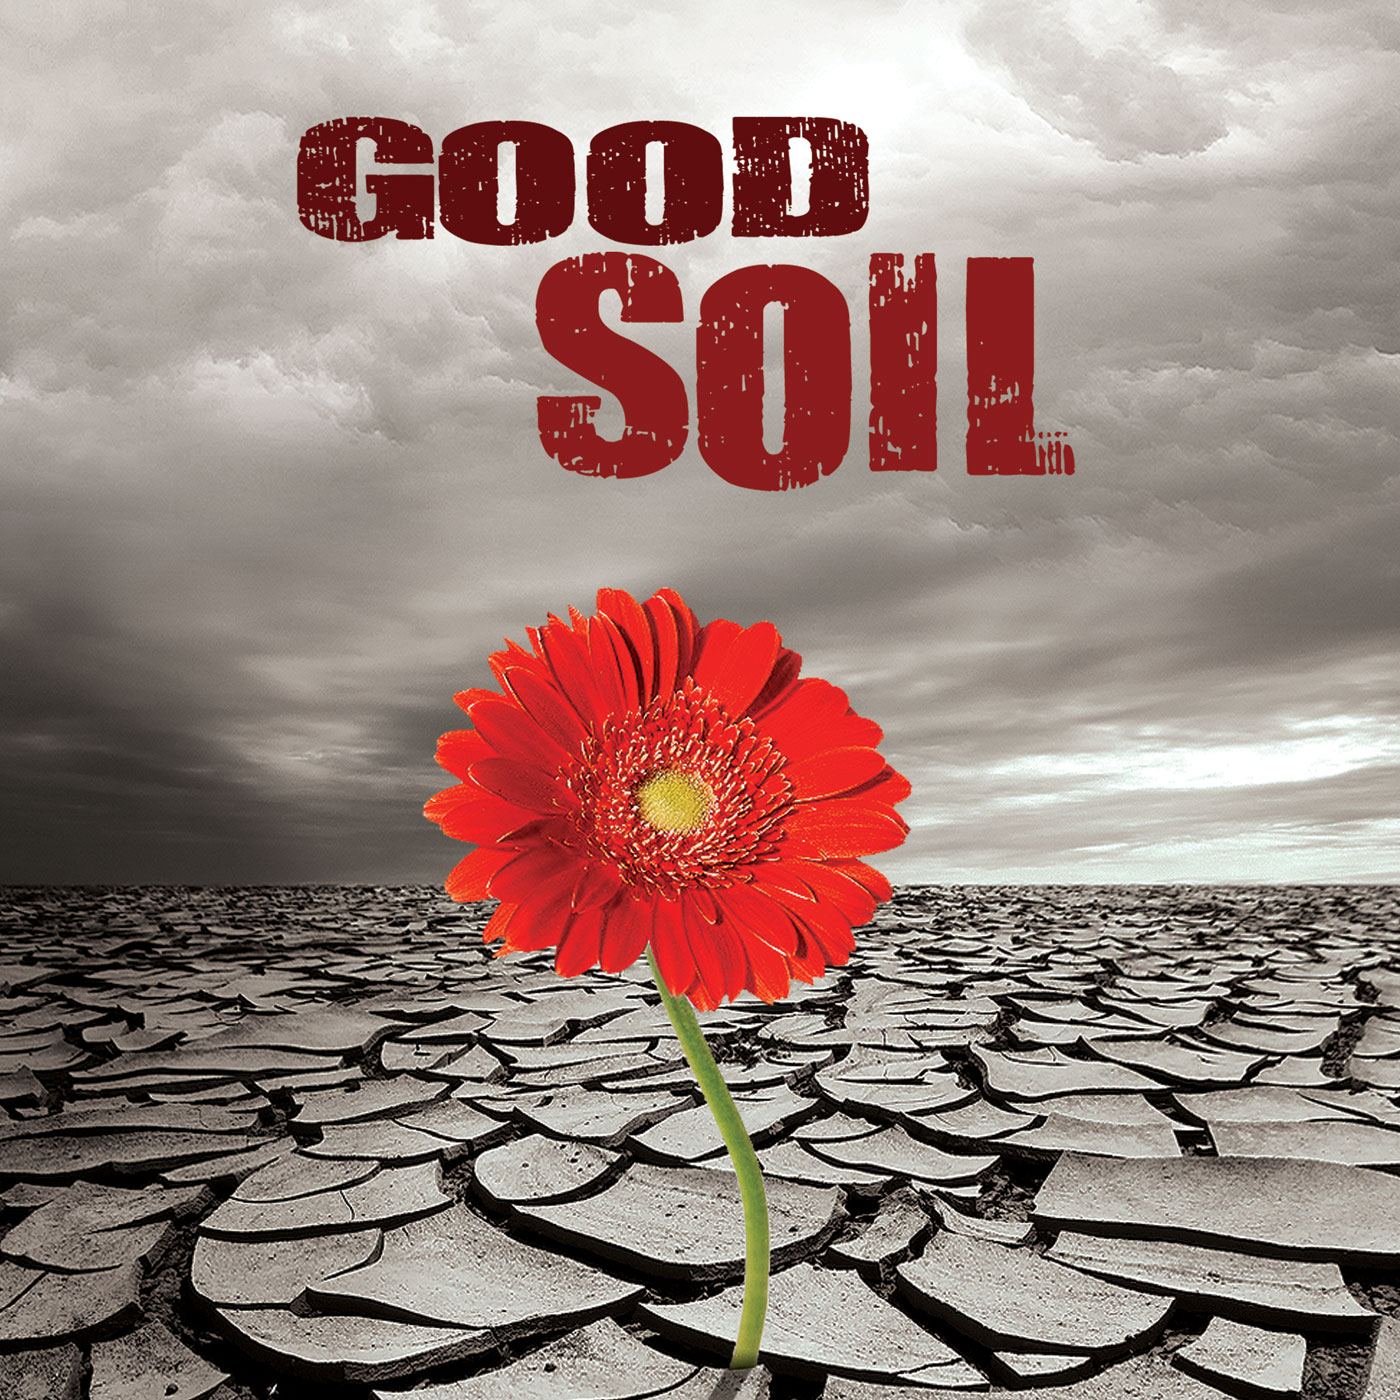 Good Soil - All In - Chris Wall - 1-6-2019